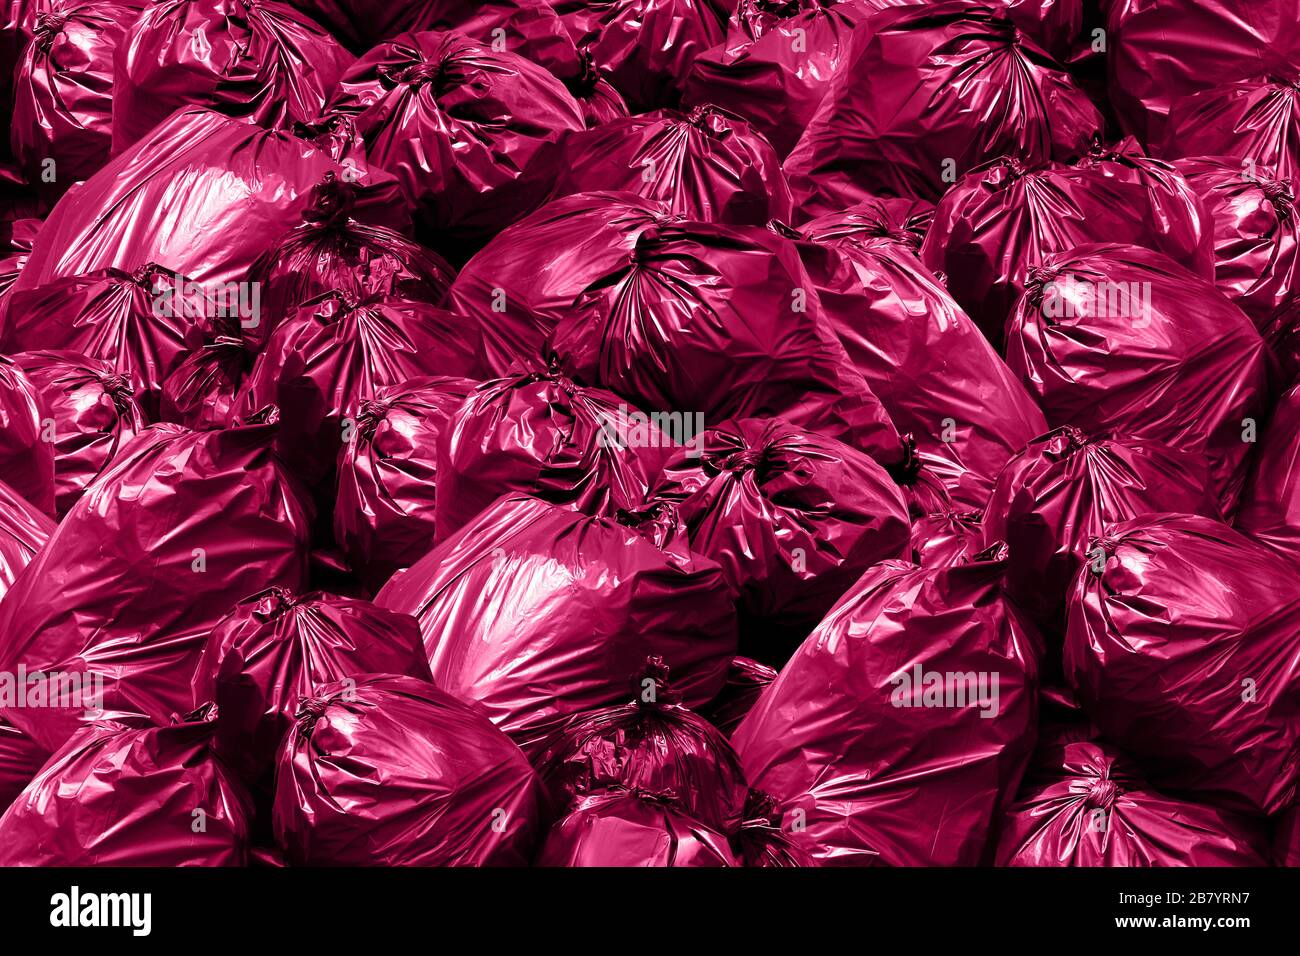 https://c8.alamy.com/comp/2B7YRN7/background-garbage-dump-bintrash-garbage-rubbish-plastic-bags-pile-garbage-bags-pink-purple-2B7YRN7.jpg